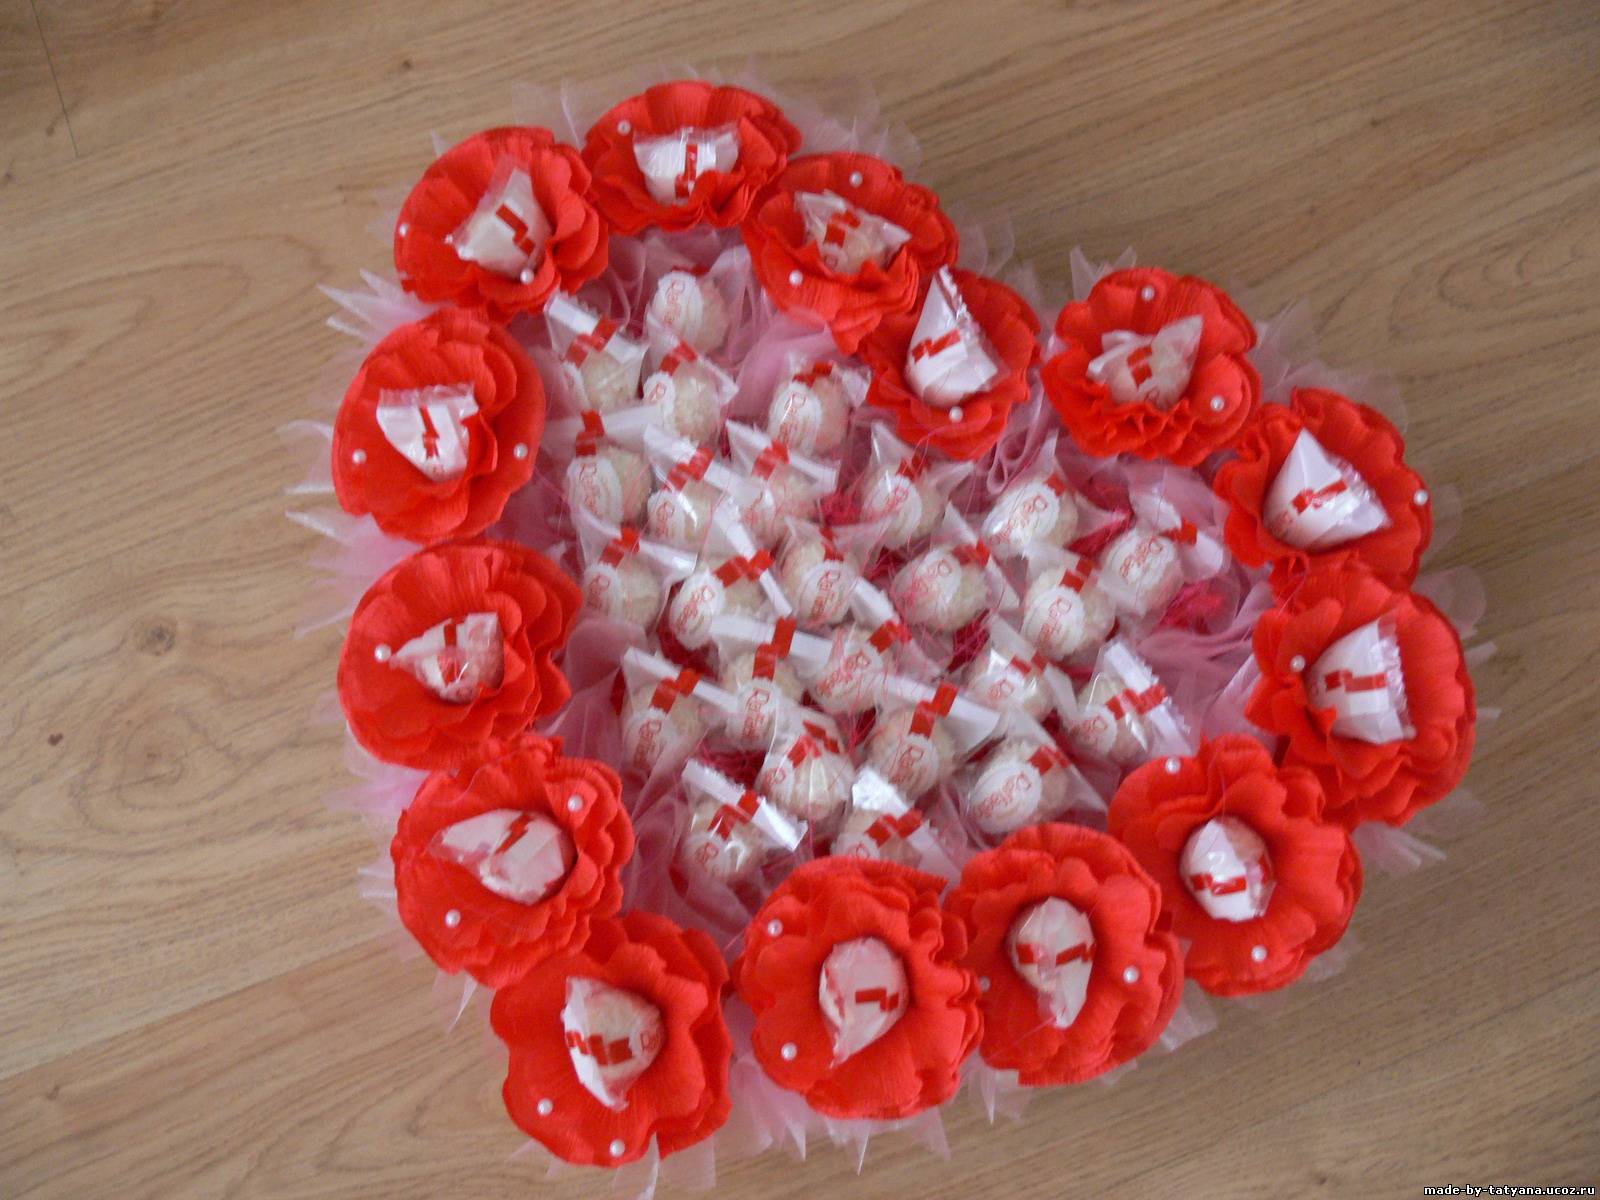 Валентинка из конфет своими руками. Фото и мастер-класс